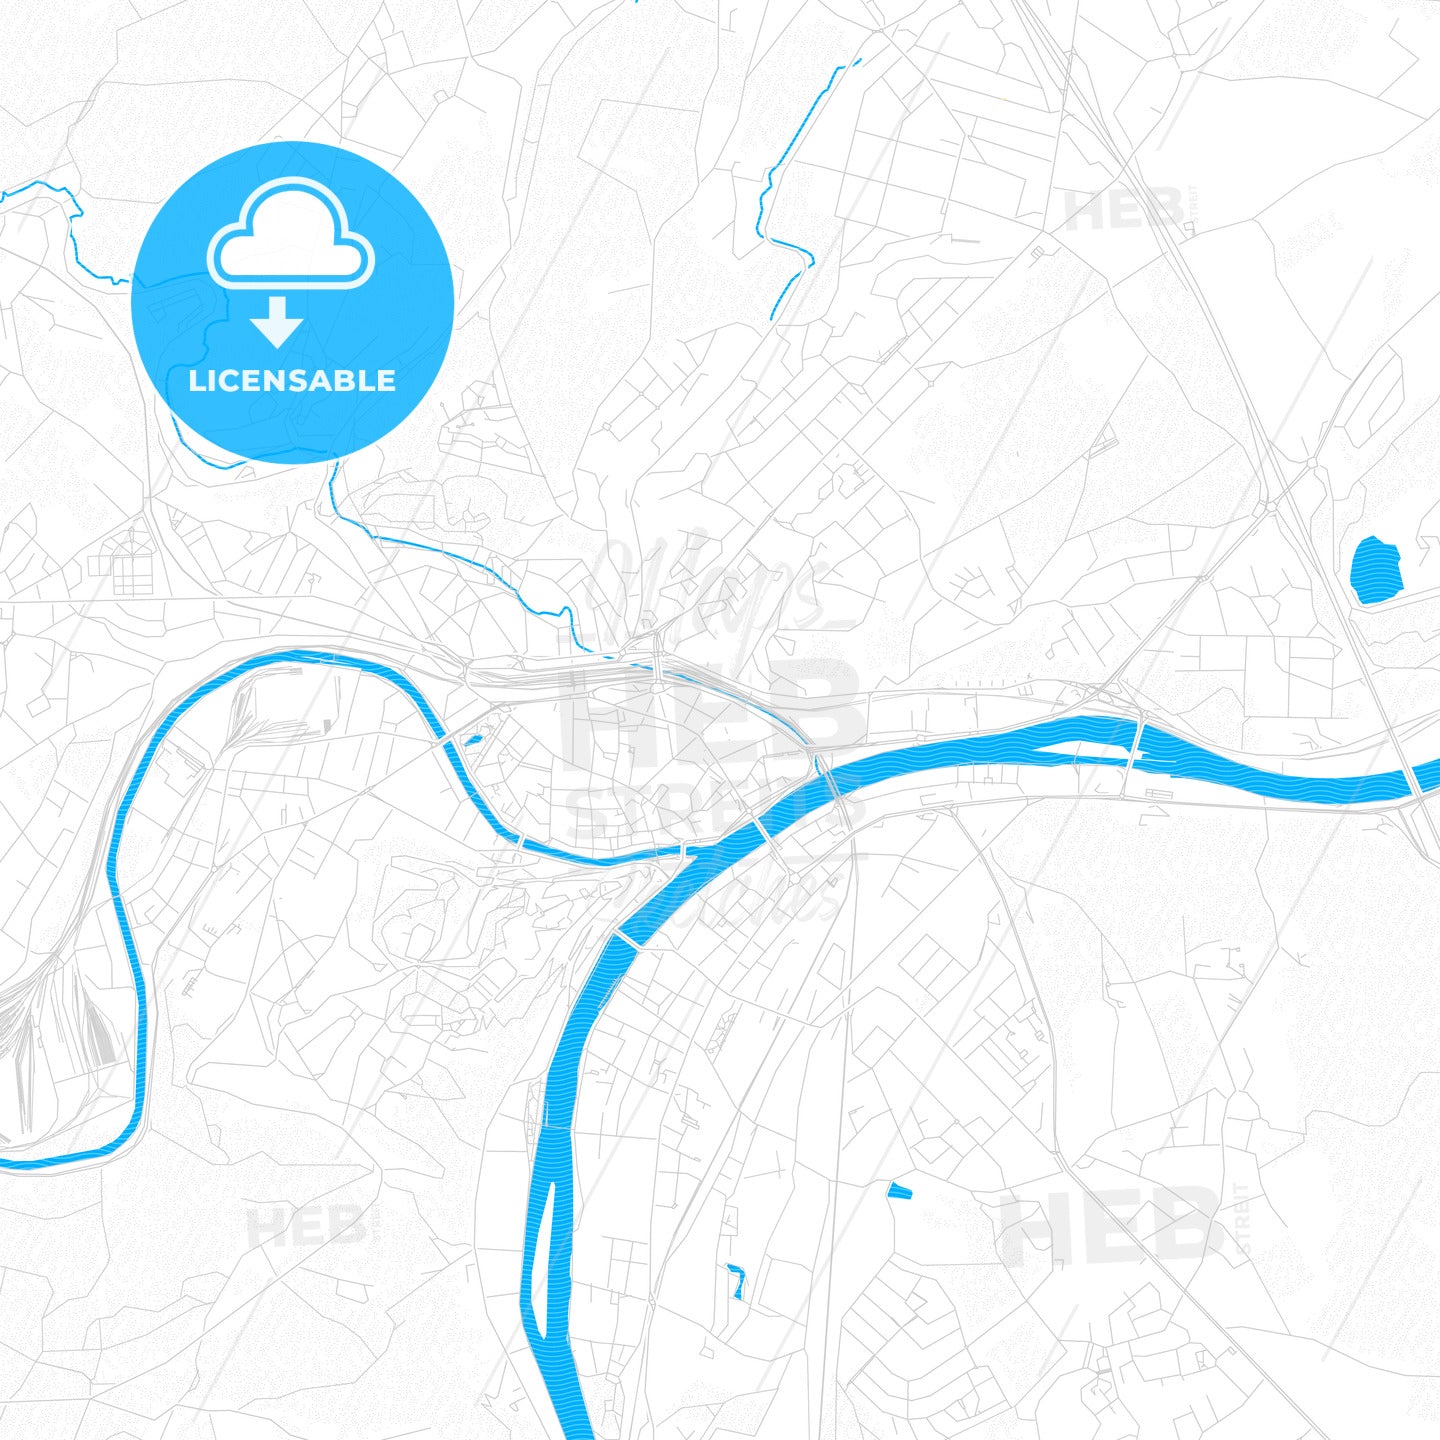 Namur, Belgium PDF vector map with water in focus